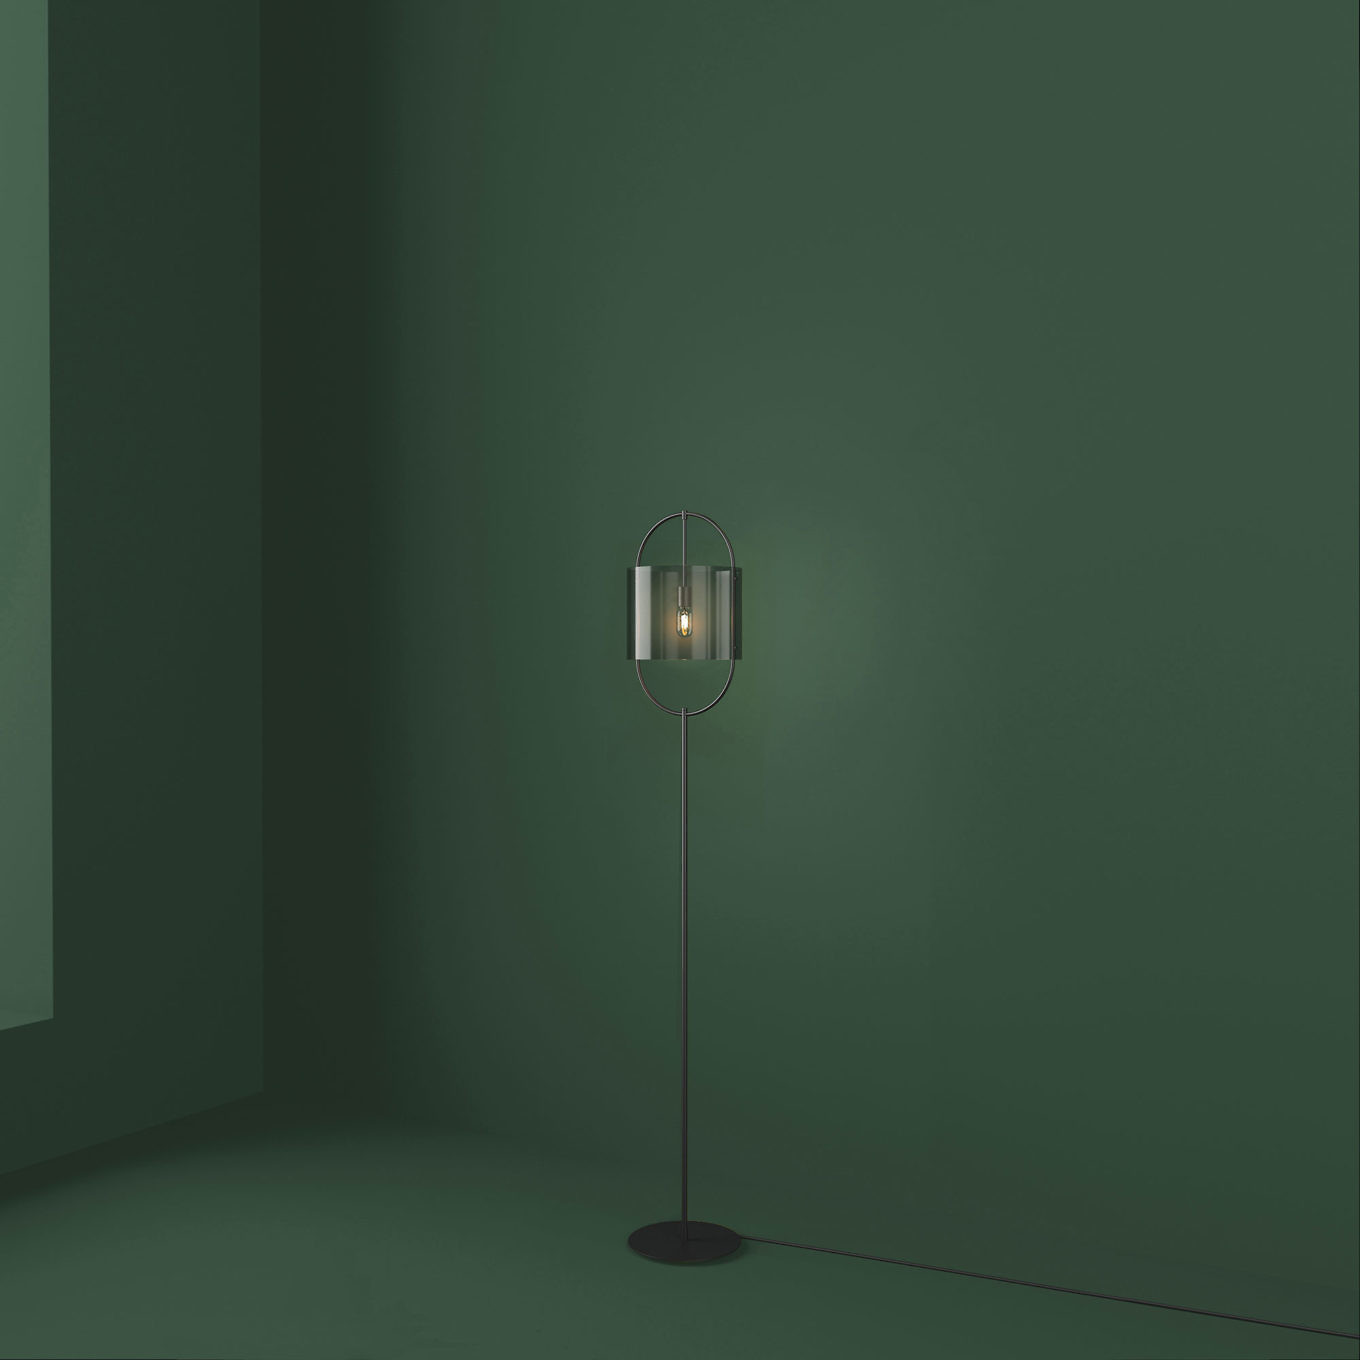 Lantern Lighting Series In the Contemporary Interior Design! 4